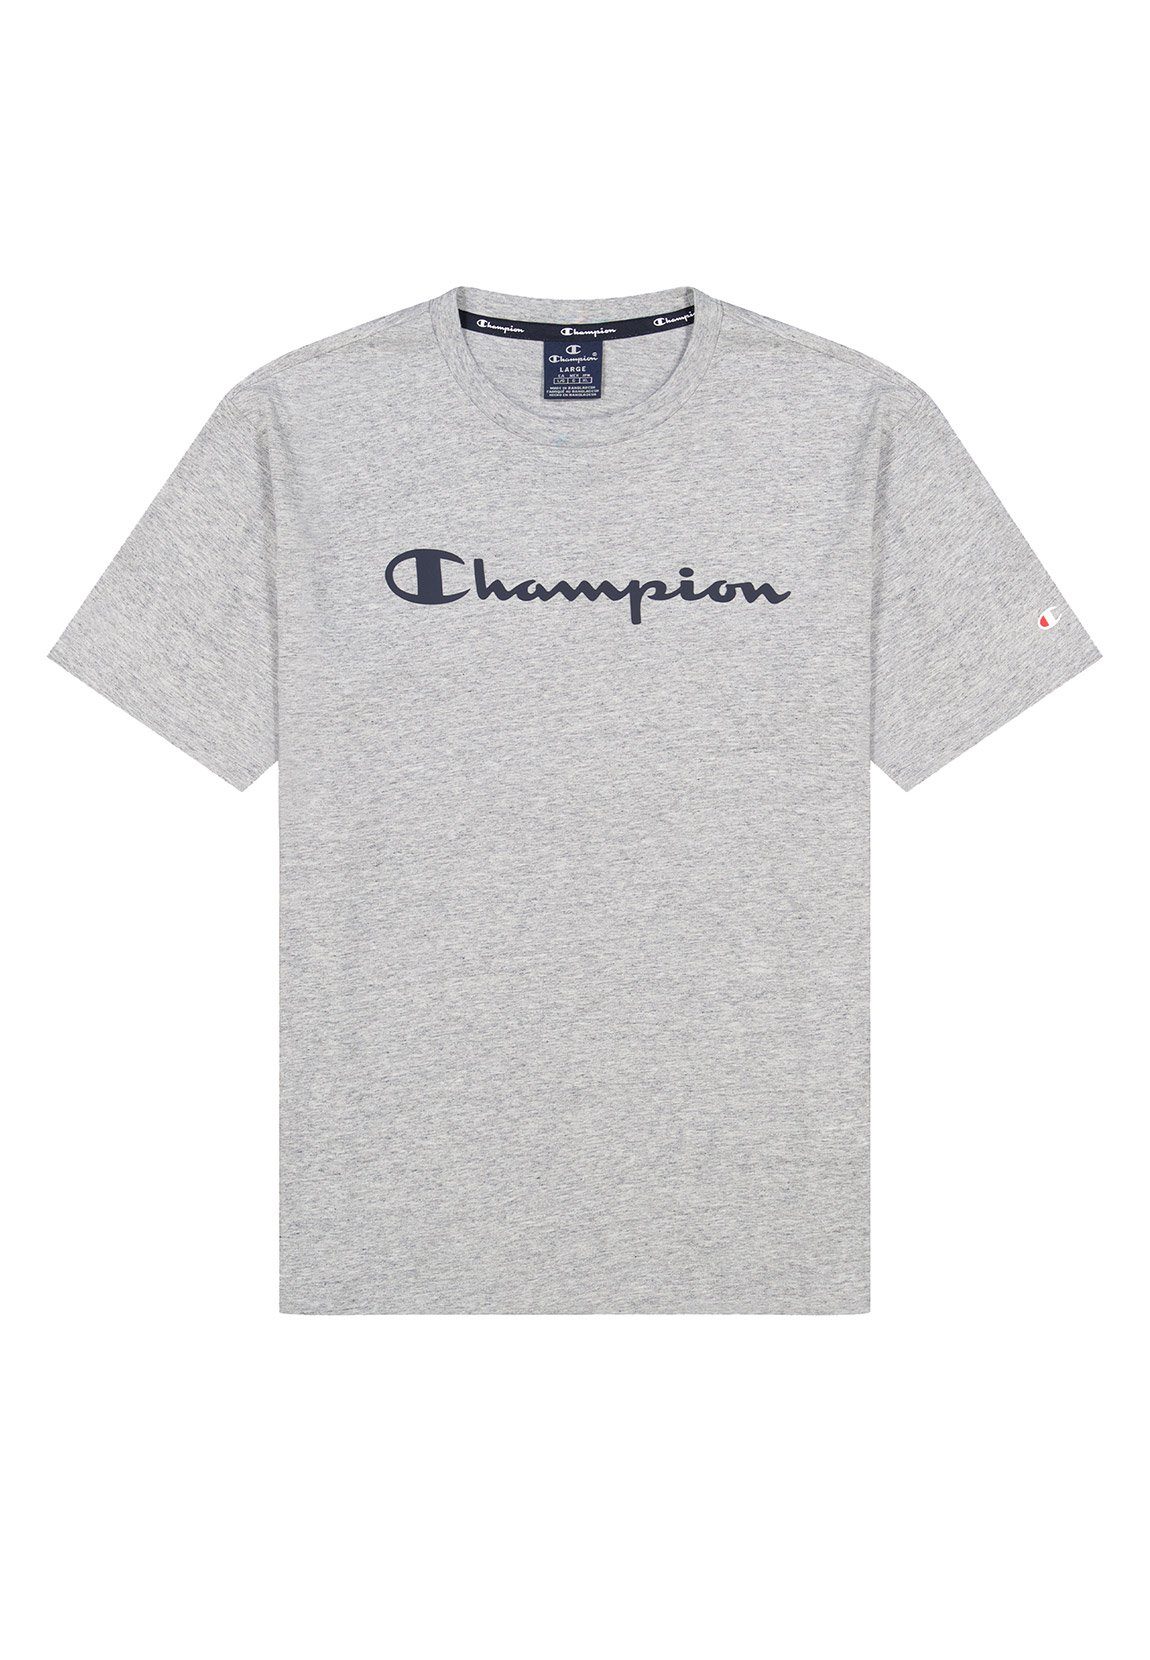 Champion T-Shirt Champion Herren NOXM Grau T-Shirt 217146 EM021